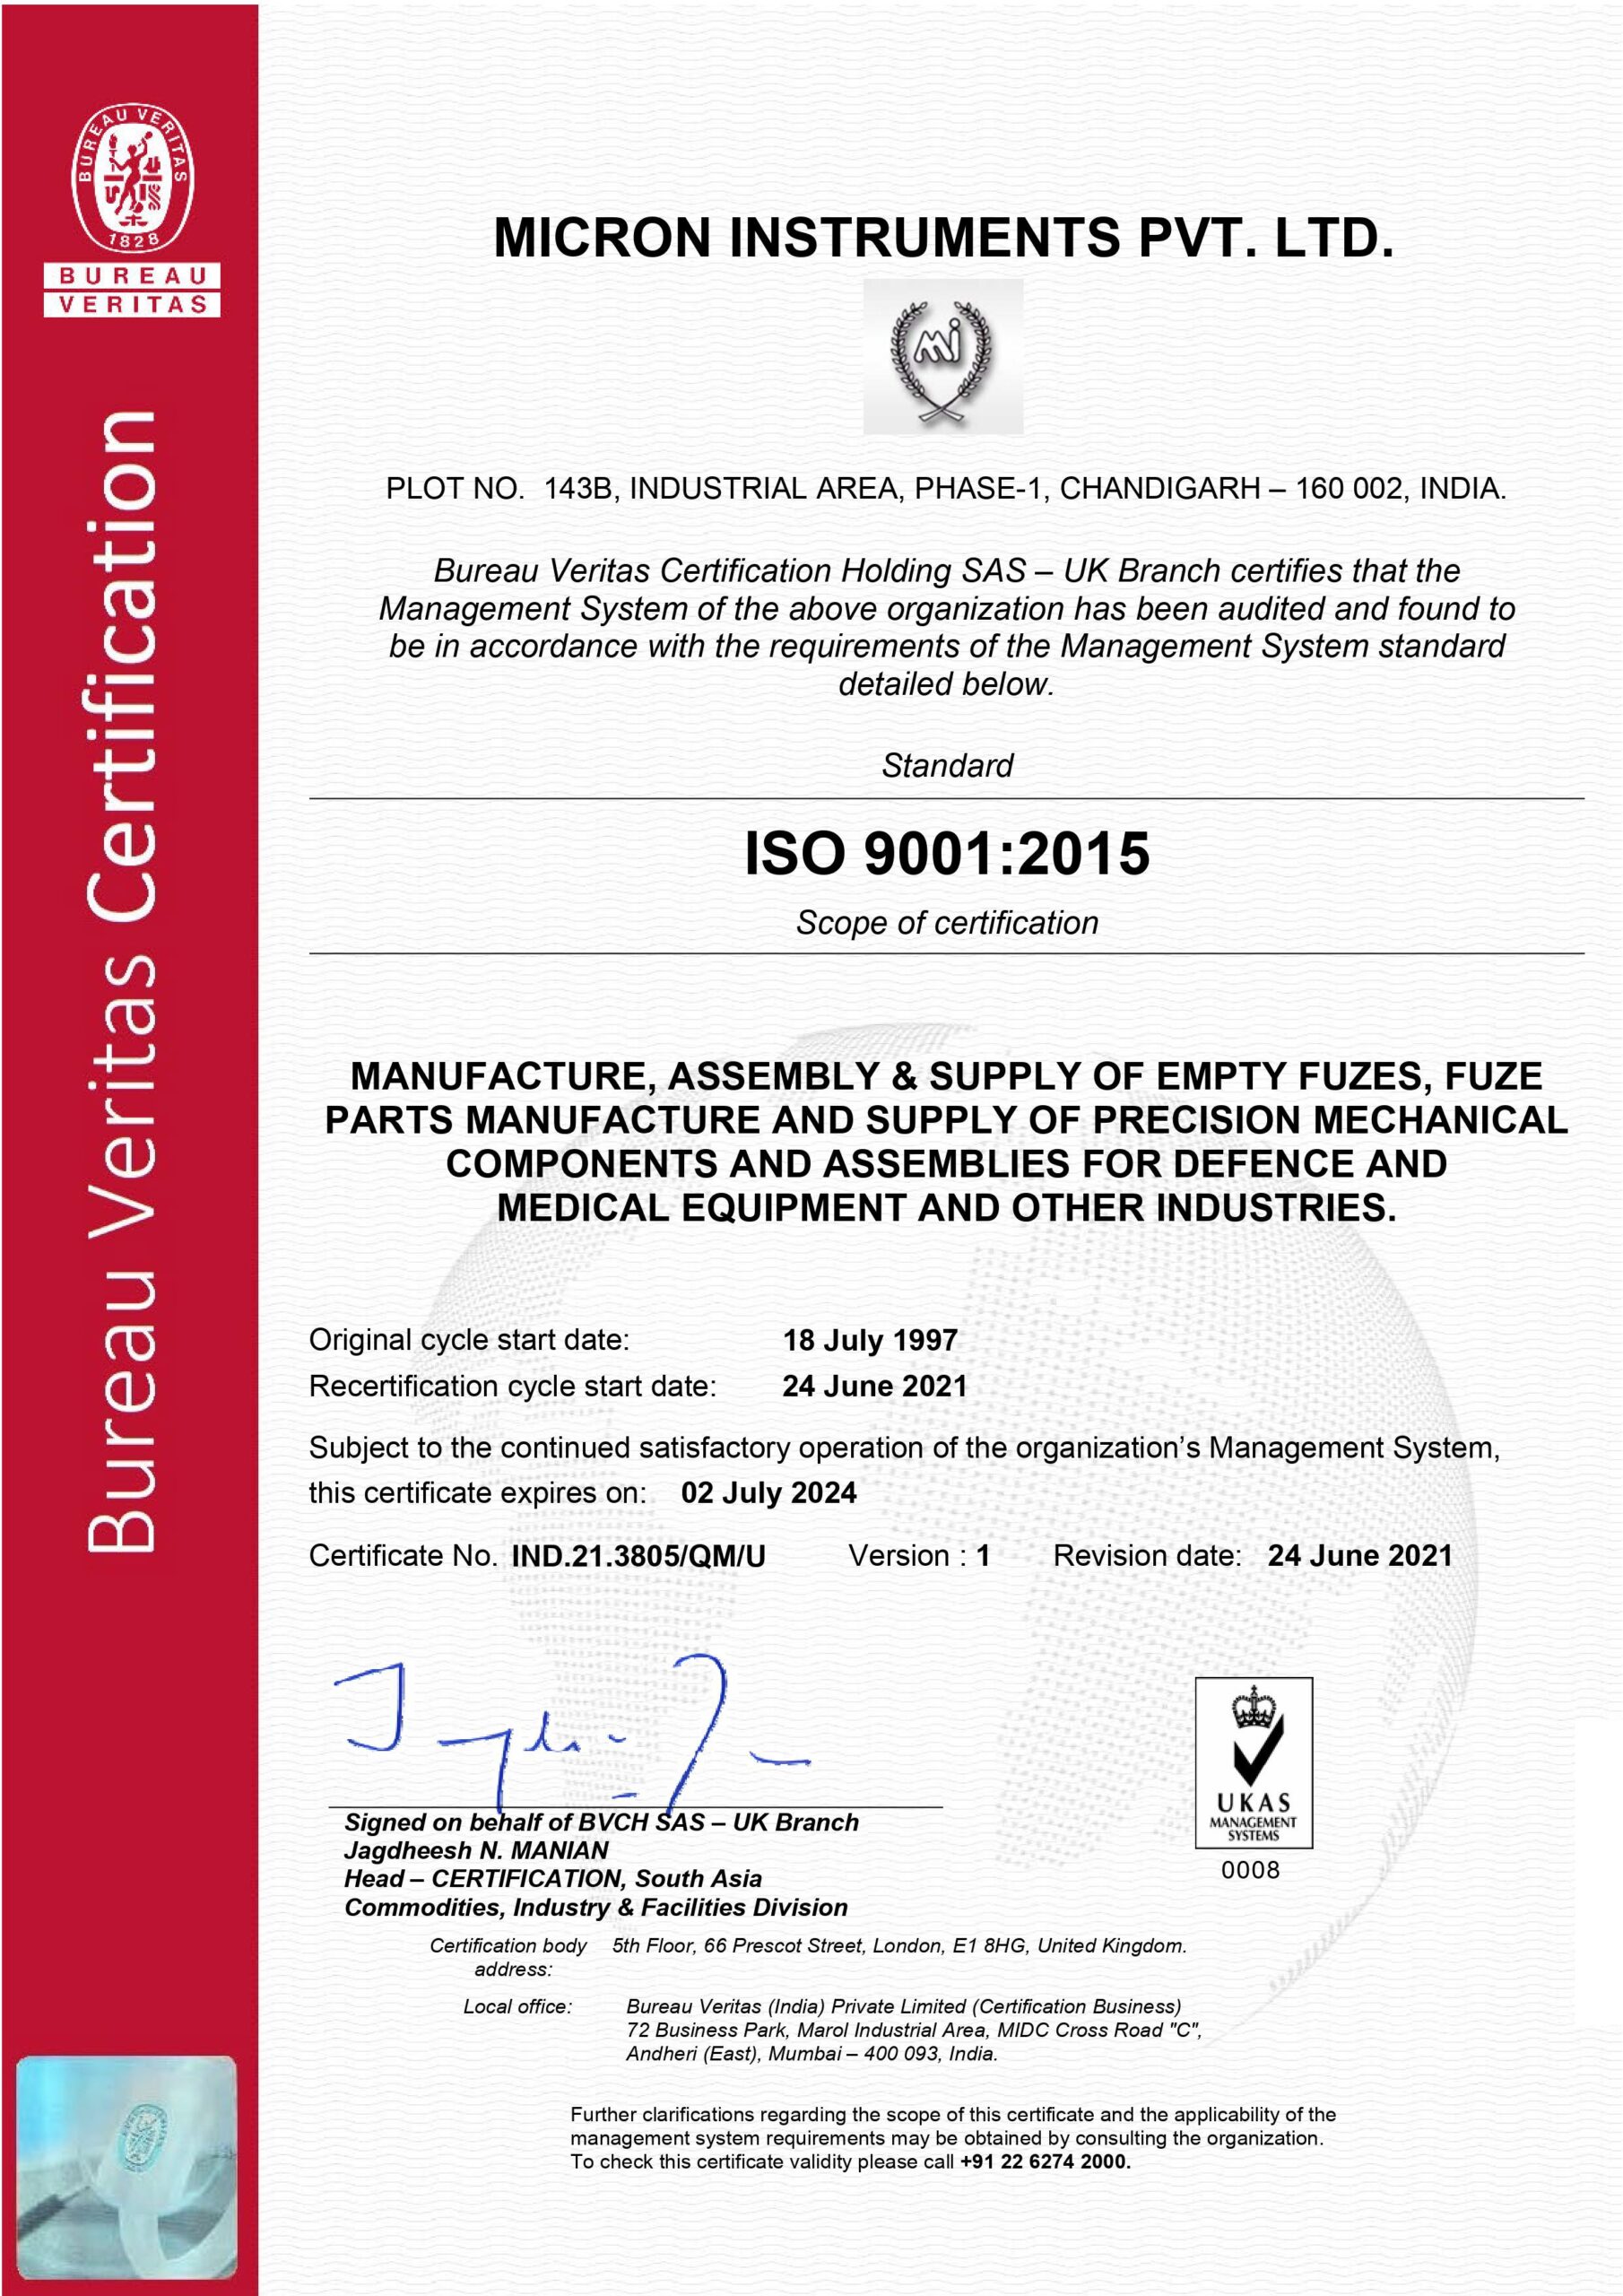 ISO Certificate_ Chandigarh plant